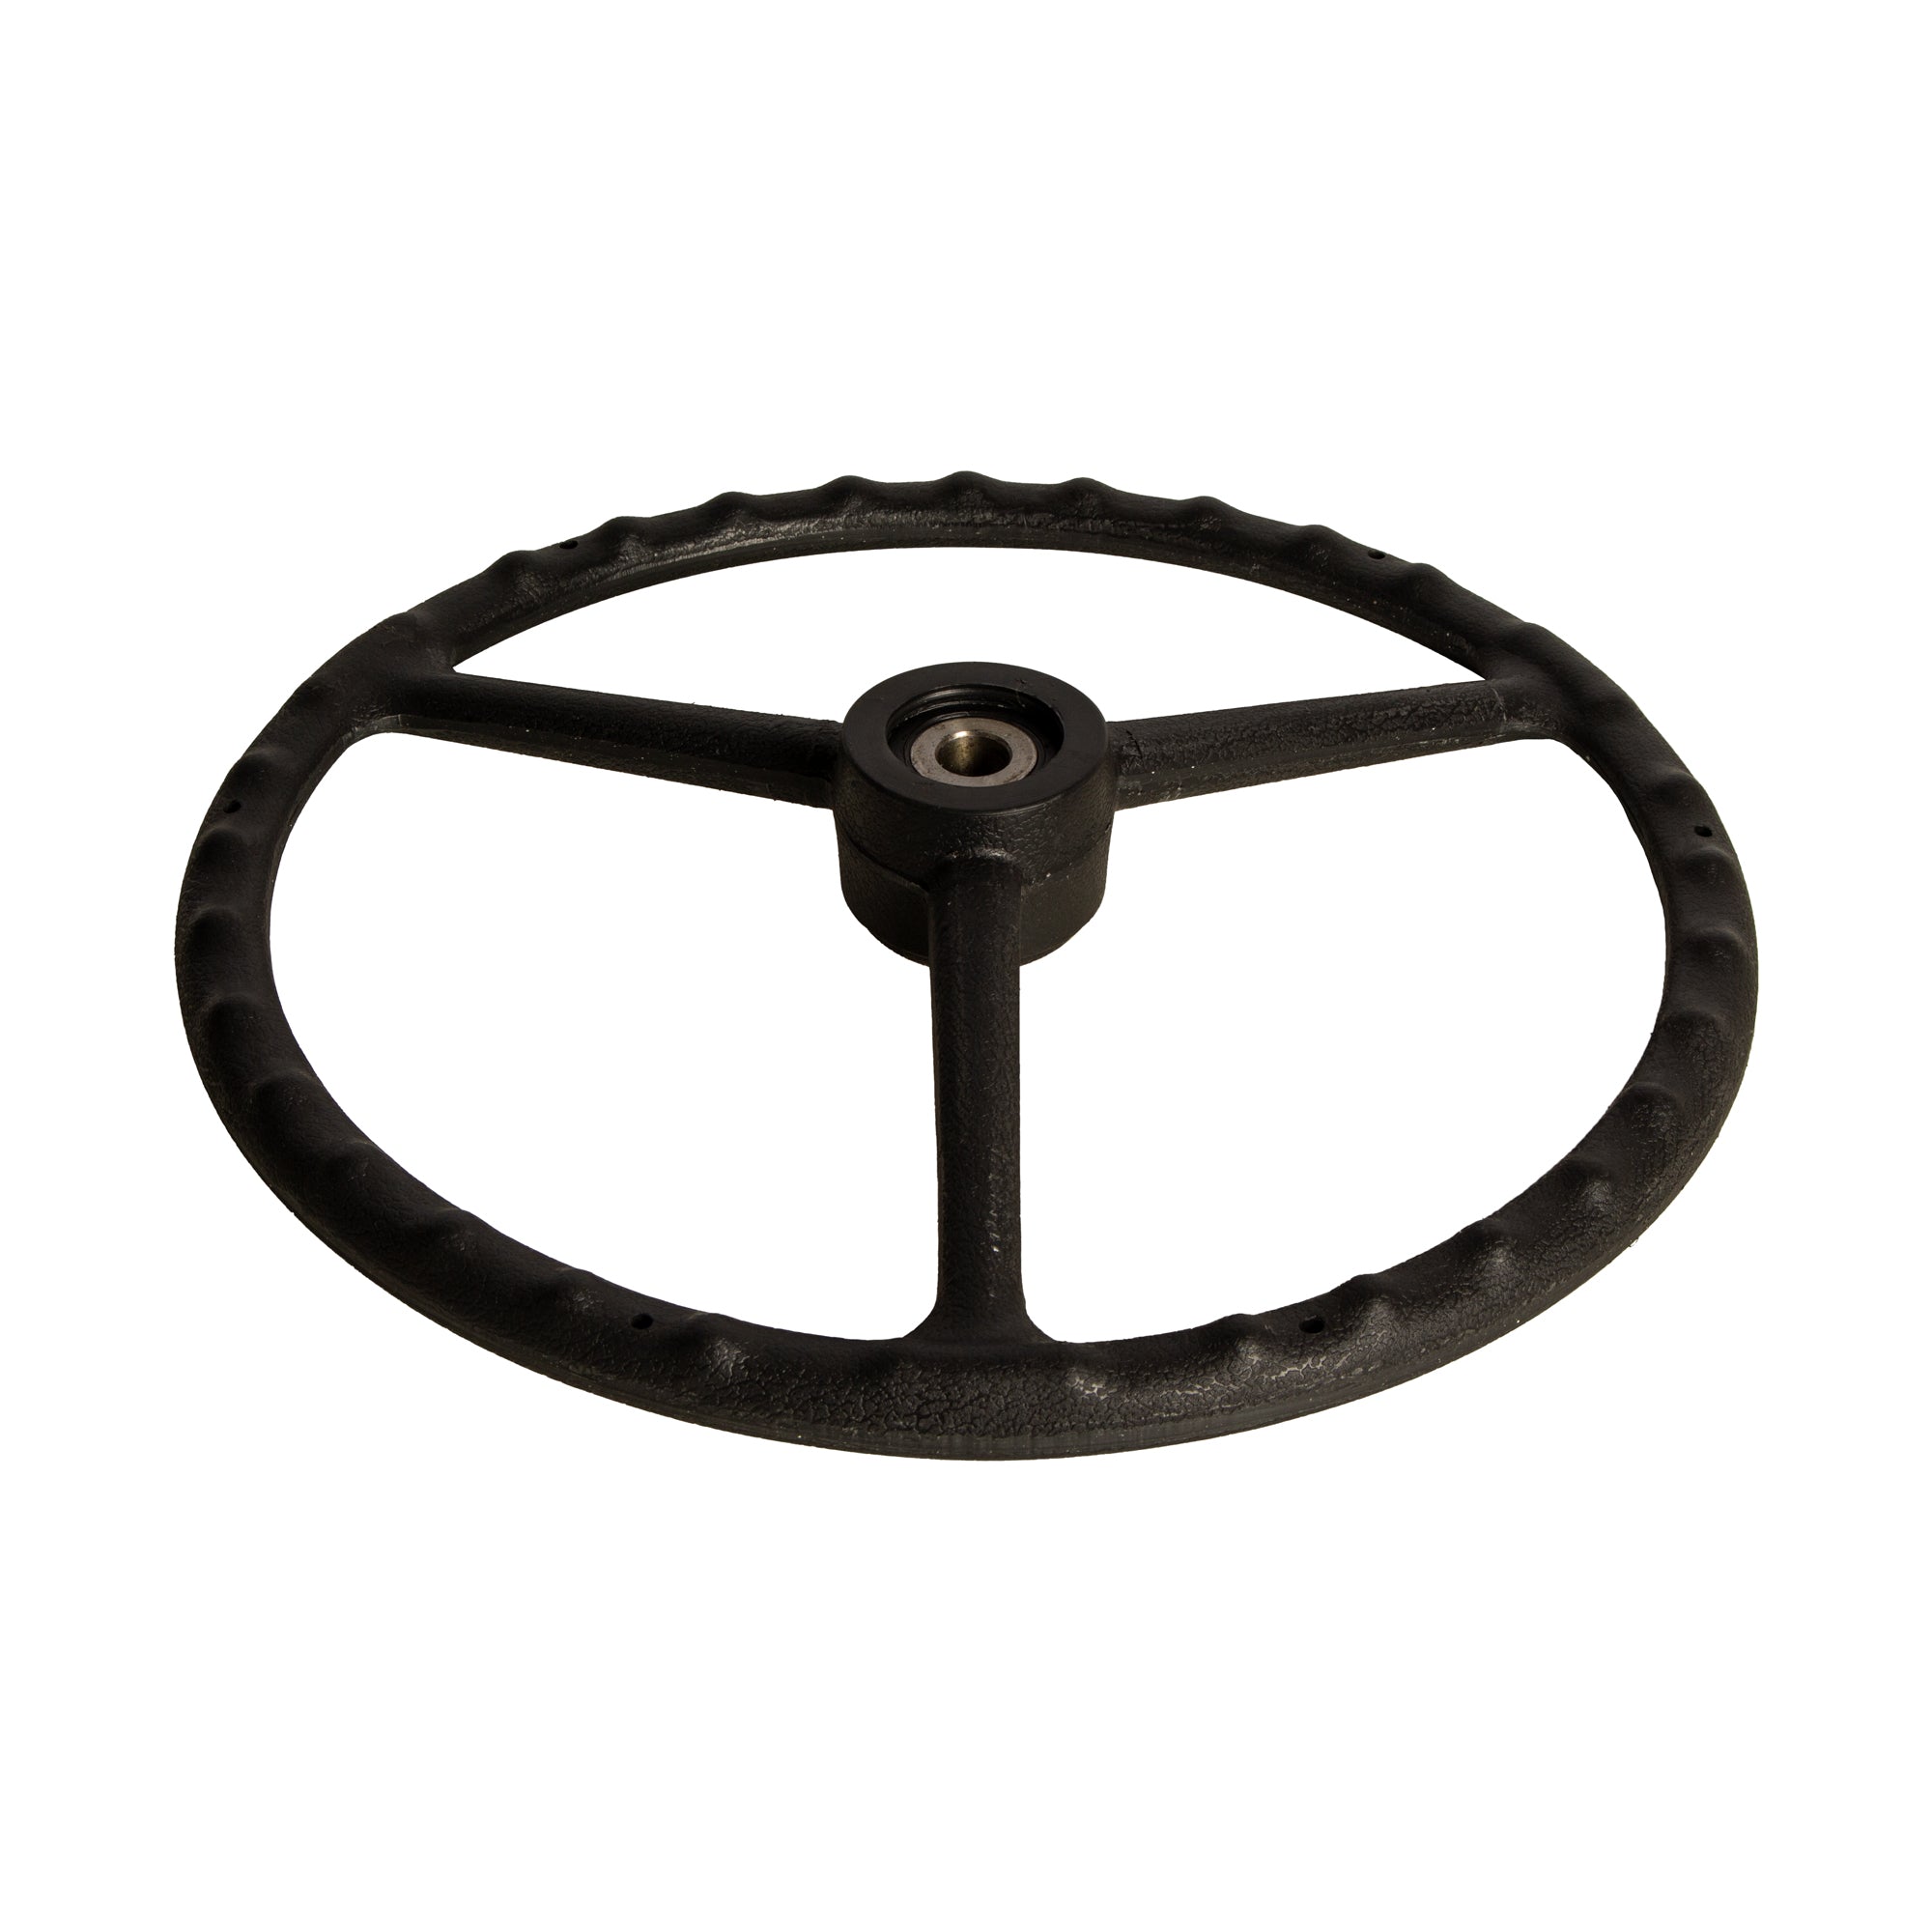 Steering Wheel & Cap Replacement for MASSEY FERGUSON 135 230 240 250 1691798M1